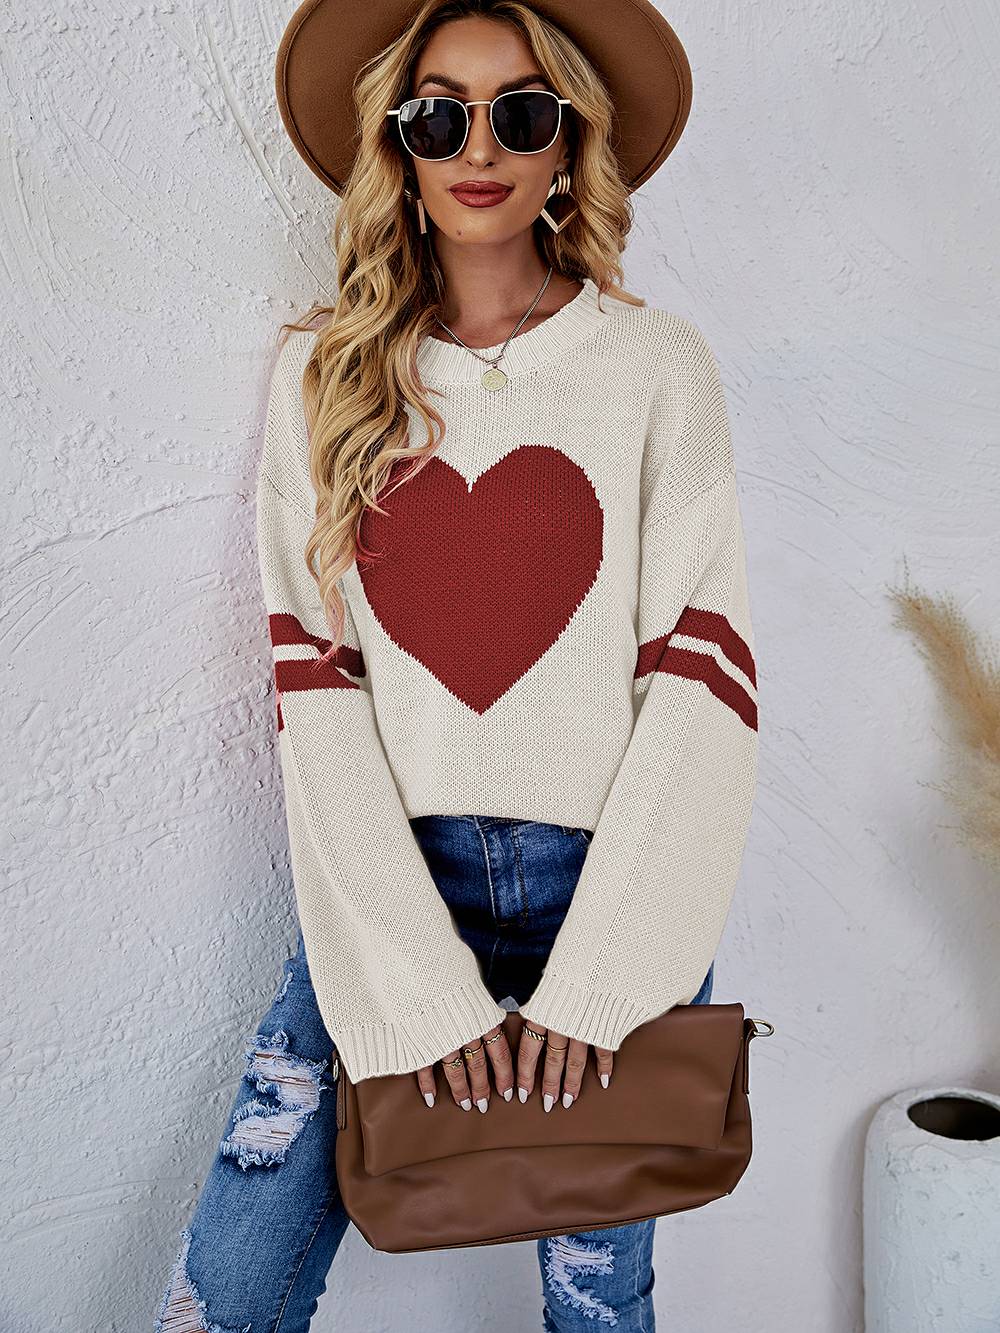 Cuddly Love 루즈핏 스웨터